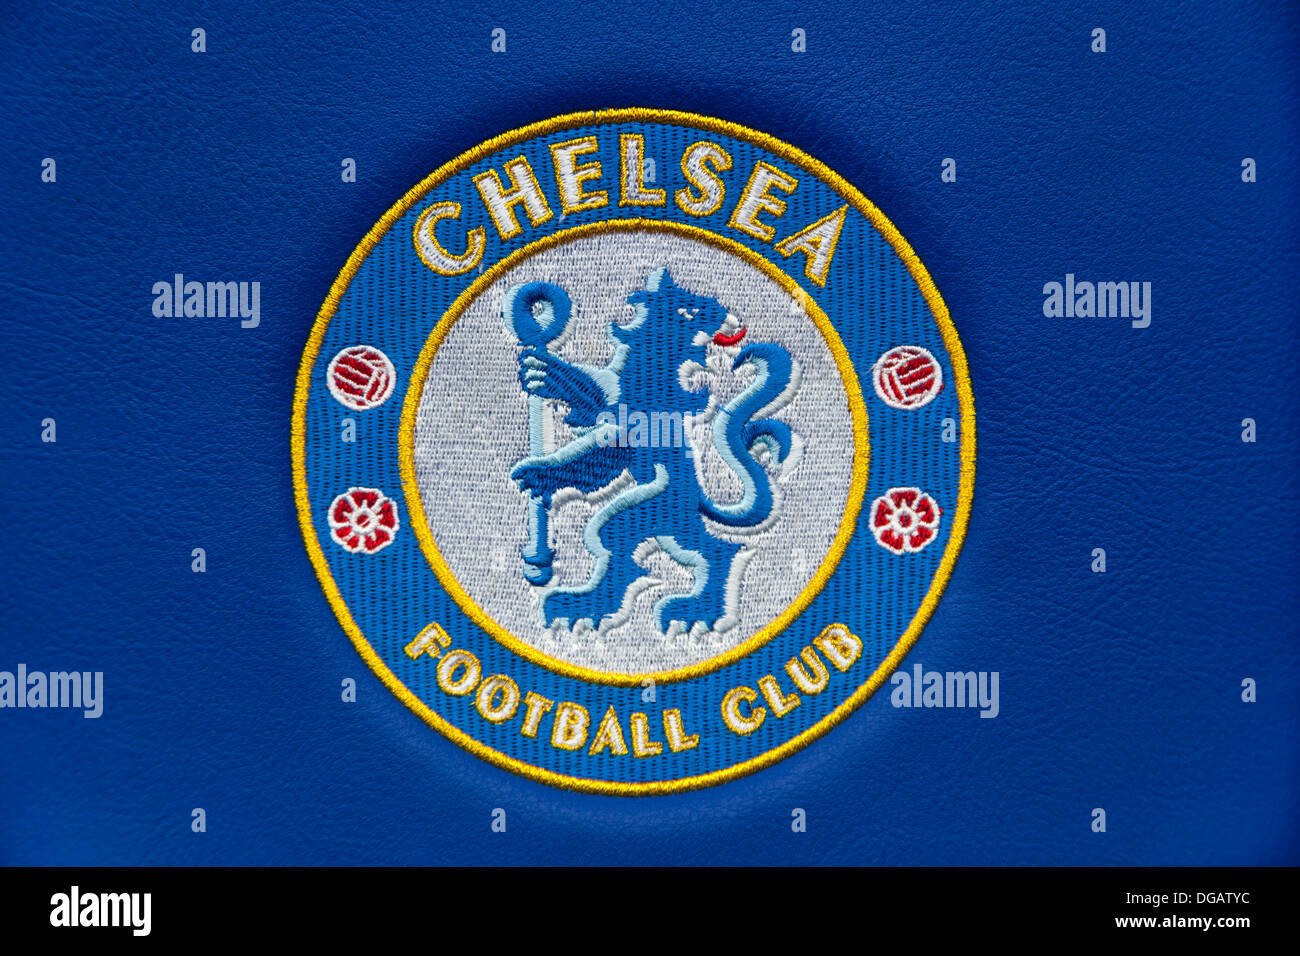 Chelsea Football Club Logo auf einem Sitzplatz in der Chelsea ausgegraben, Chelsea Football Club, Stamford Bridge, London, England Stockfoto